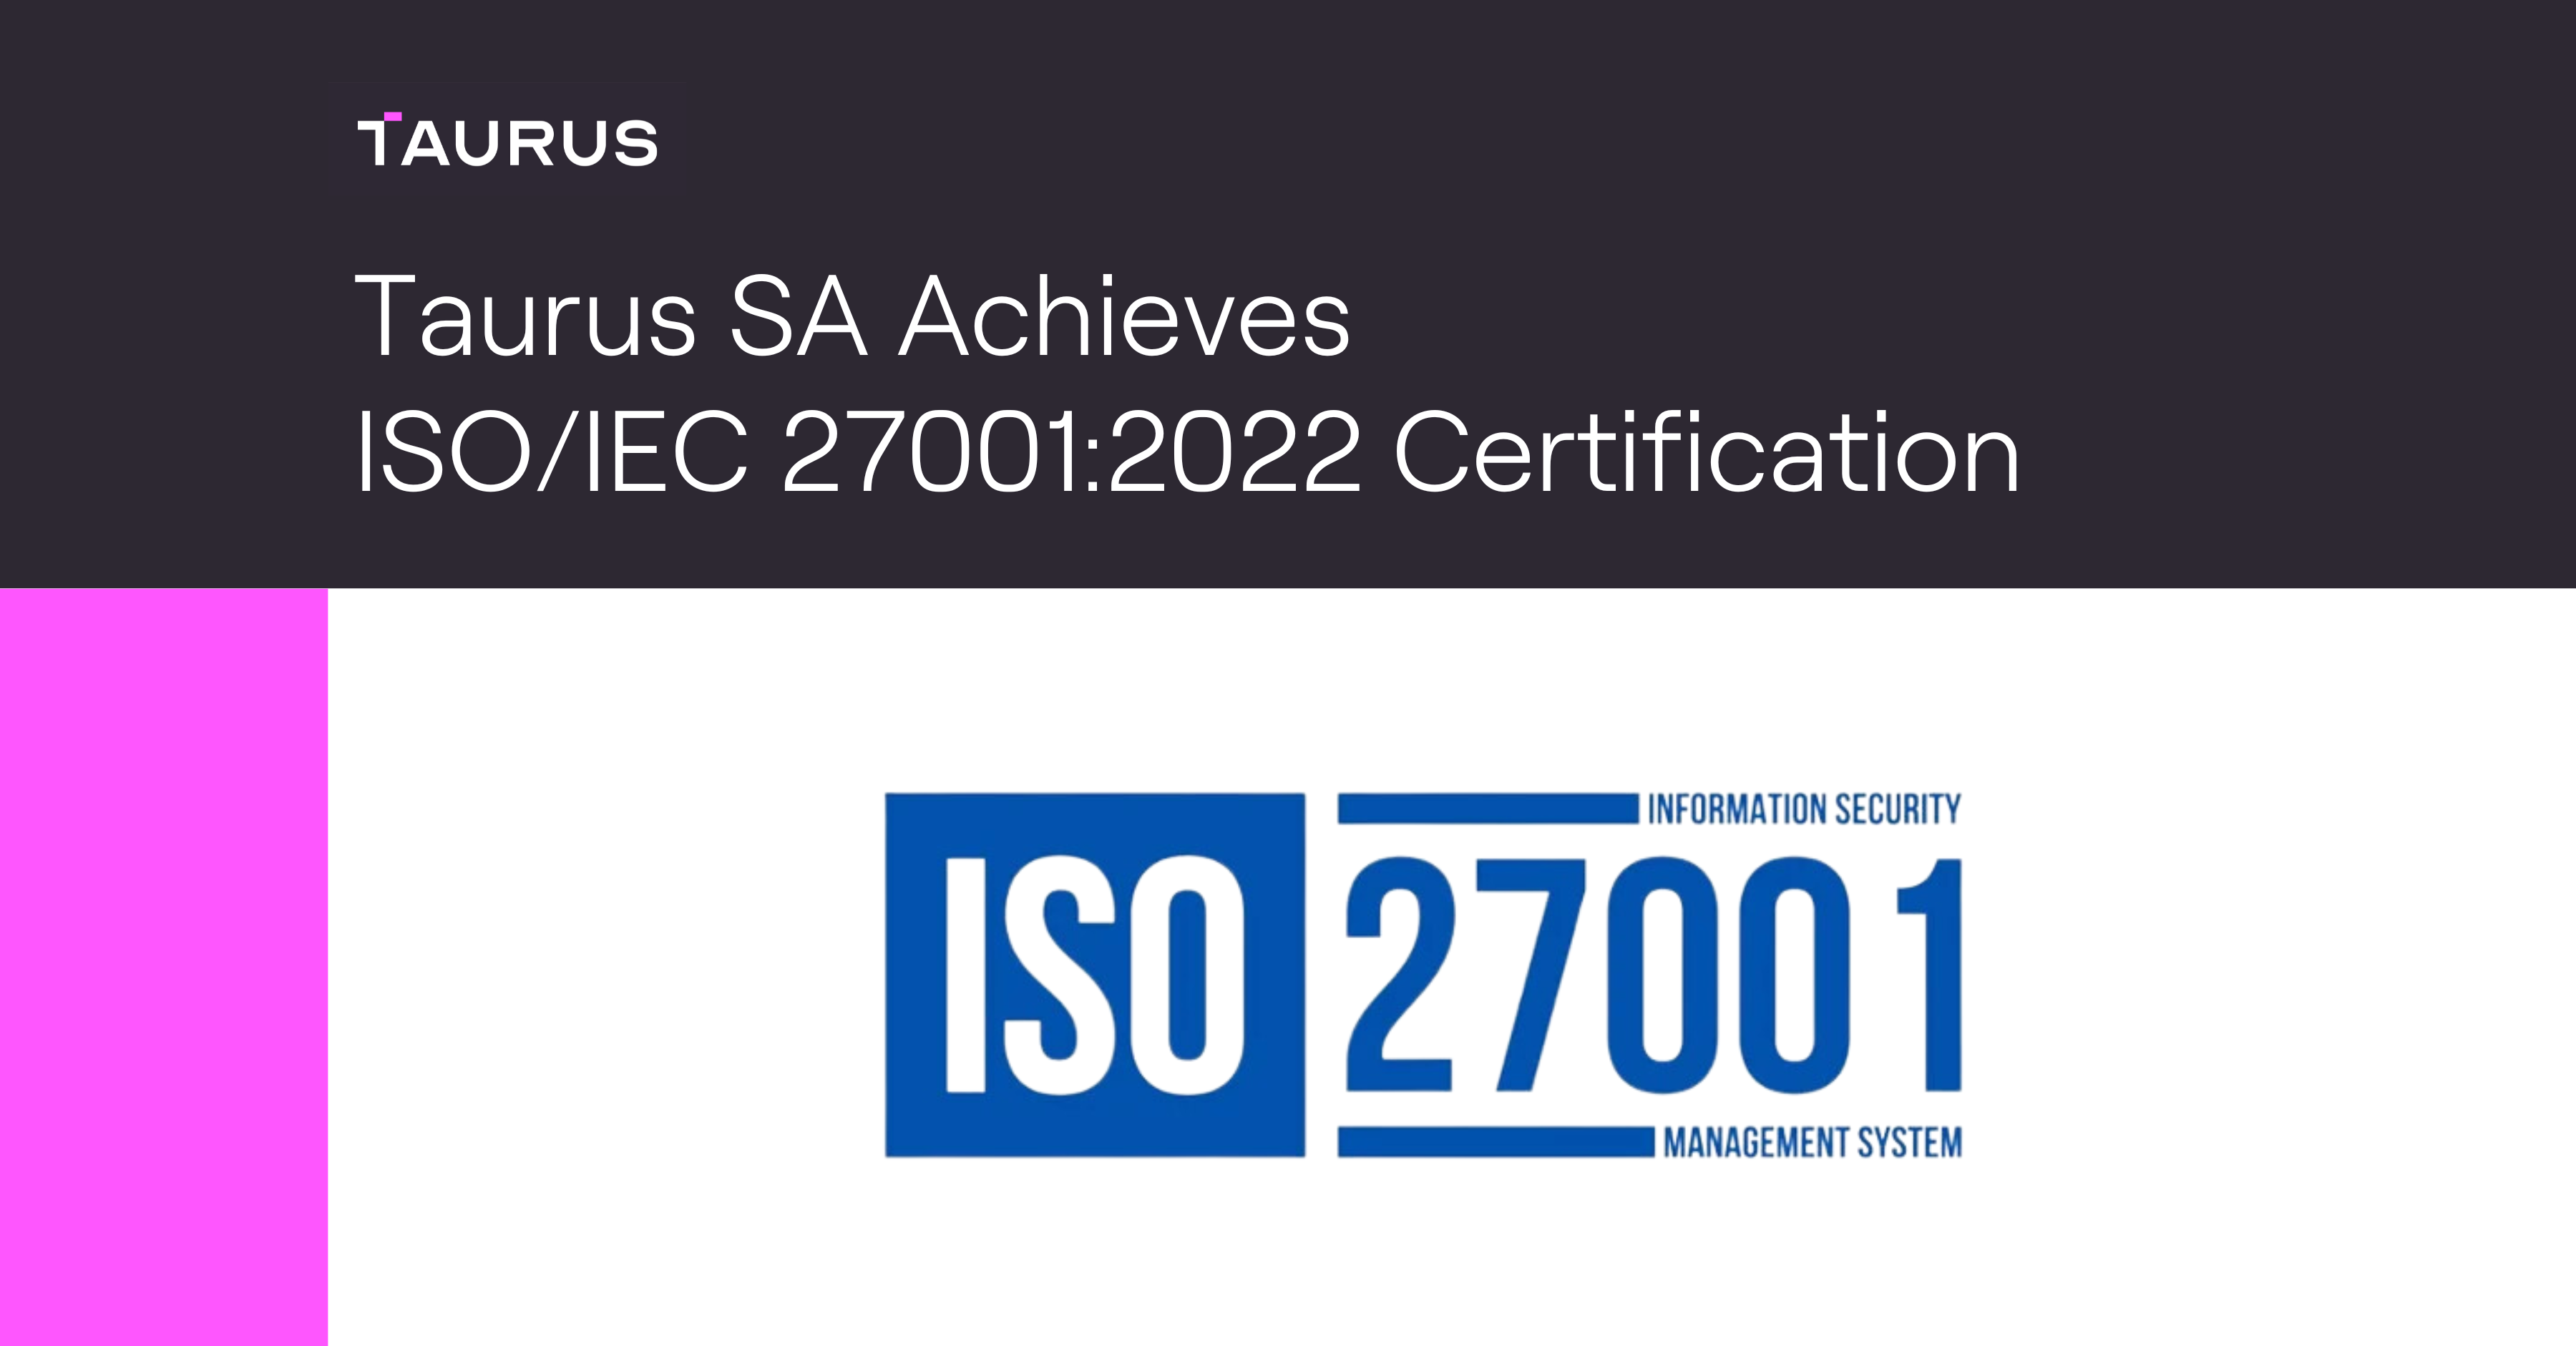 Taurus SA Achieves ISO/IEC 27001:2022 Certification